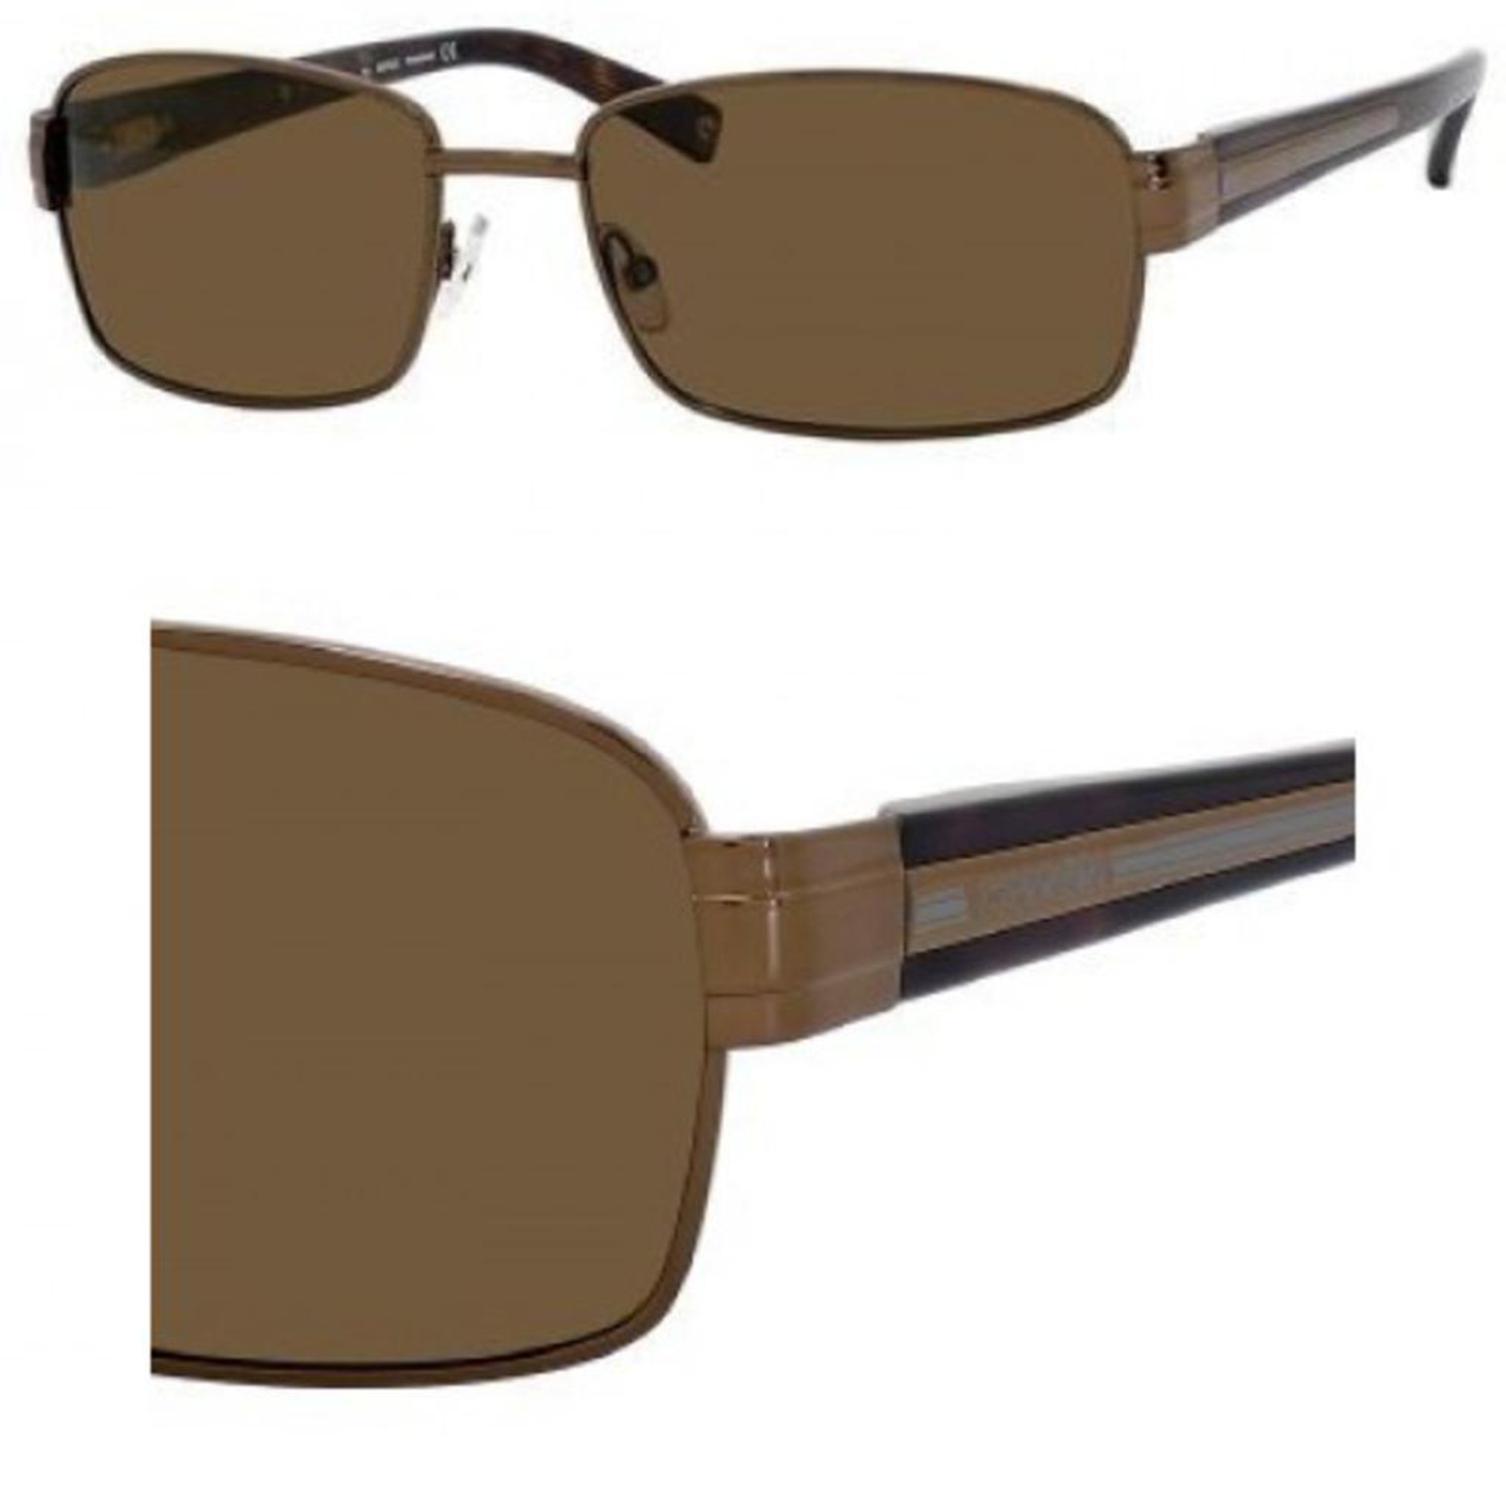 Sunglasses Carrera AIRFLOW/S 6ZMP Shiny Bronze / Vw Brown Polarized Lens - image 1 of 2